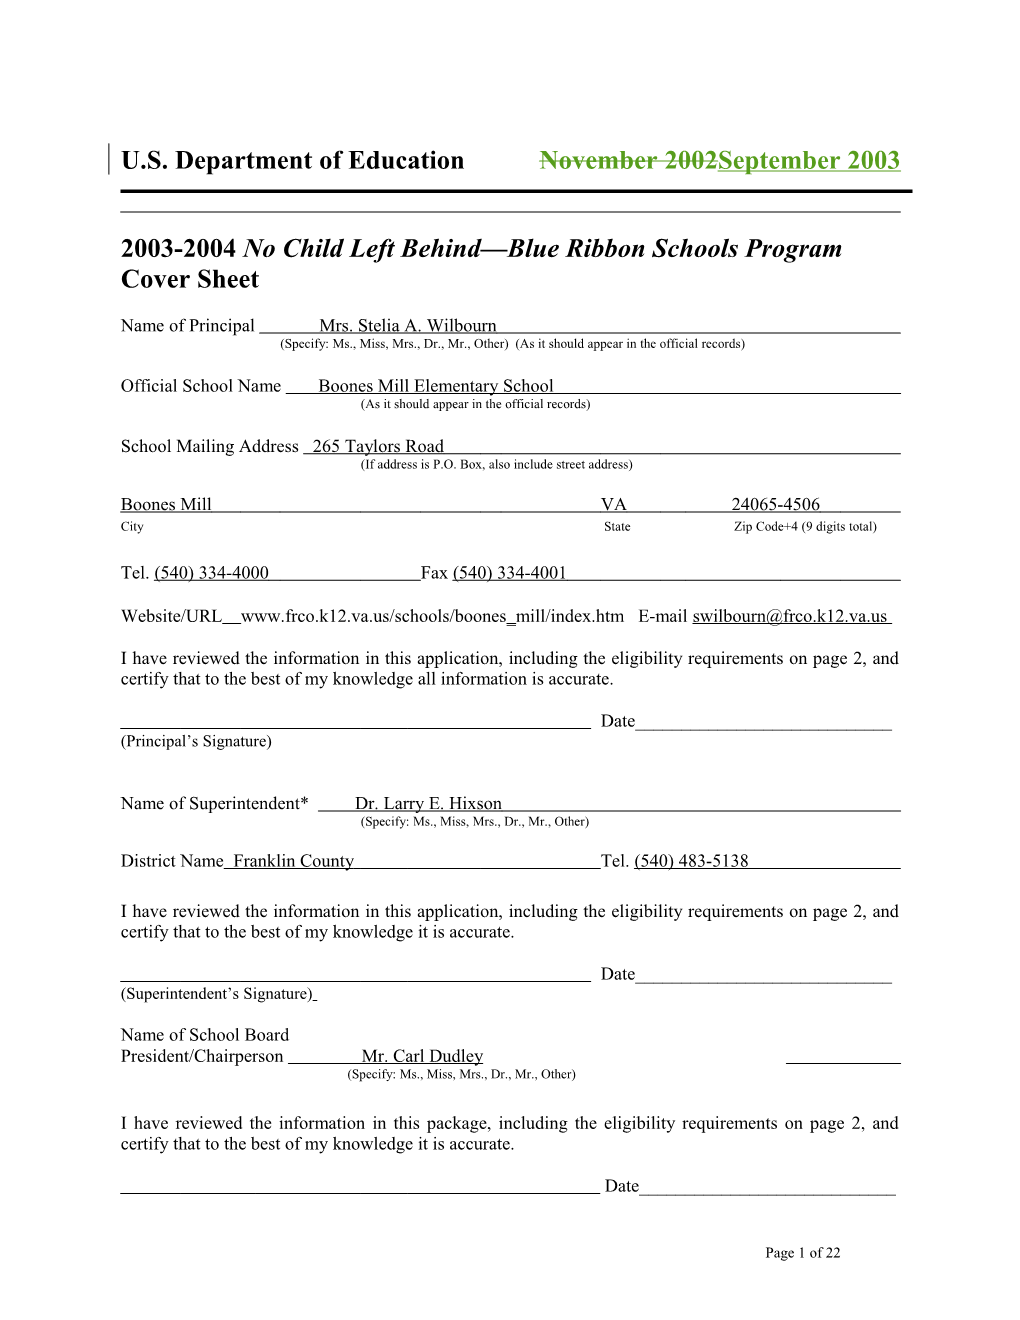 Boones Mill Elementary School 2004 No Child Left Behind-Blue Ribbon School Application (Msword)